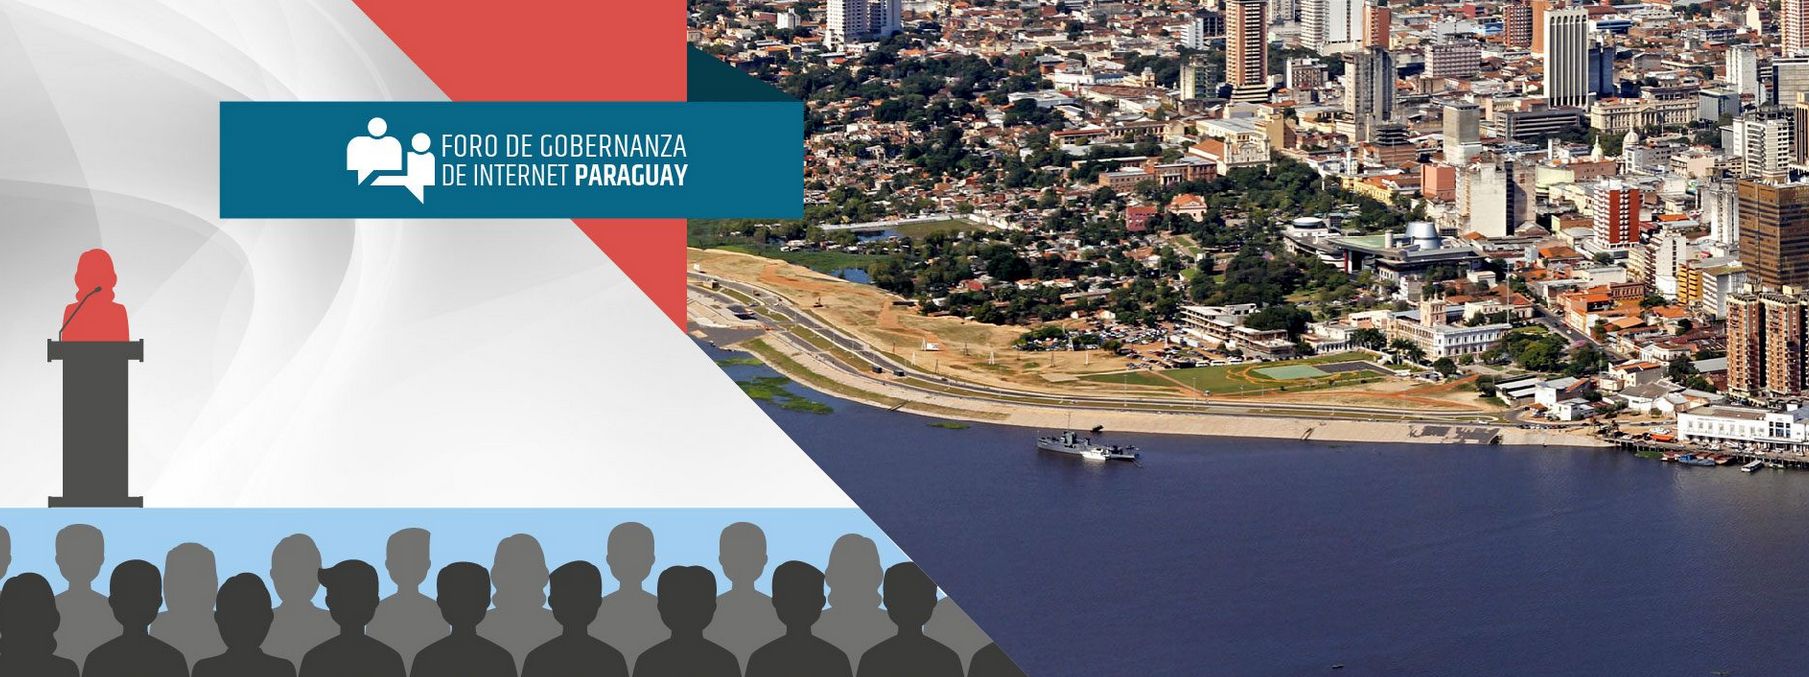 Foro de Gobernanza de Internet Paraguay (IGFpy) 2019